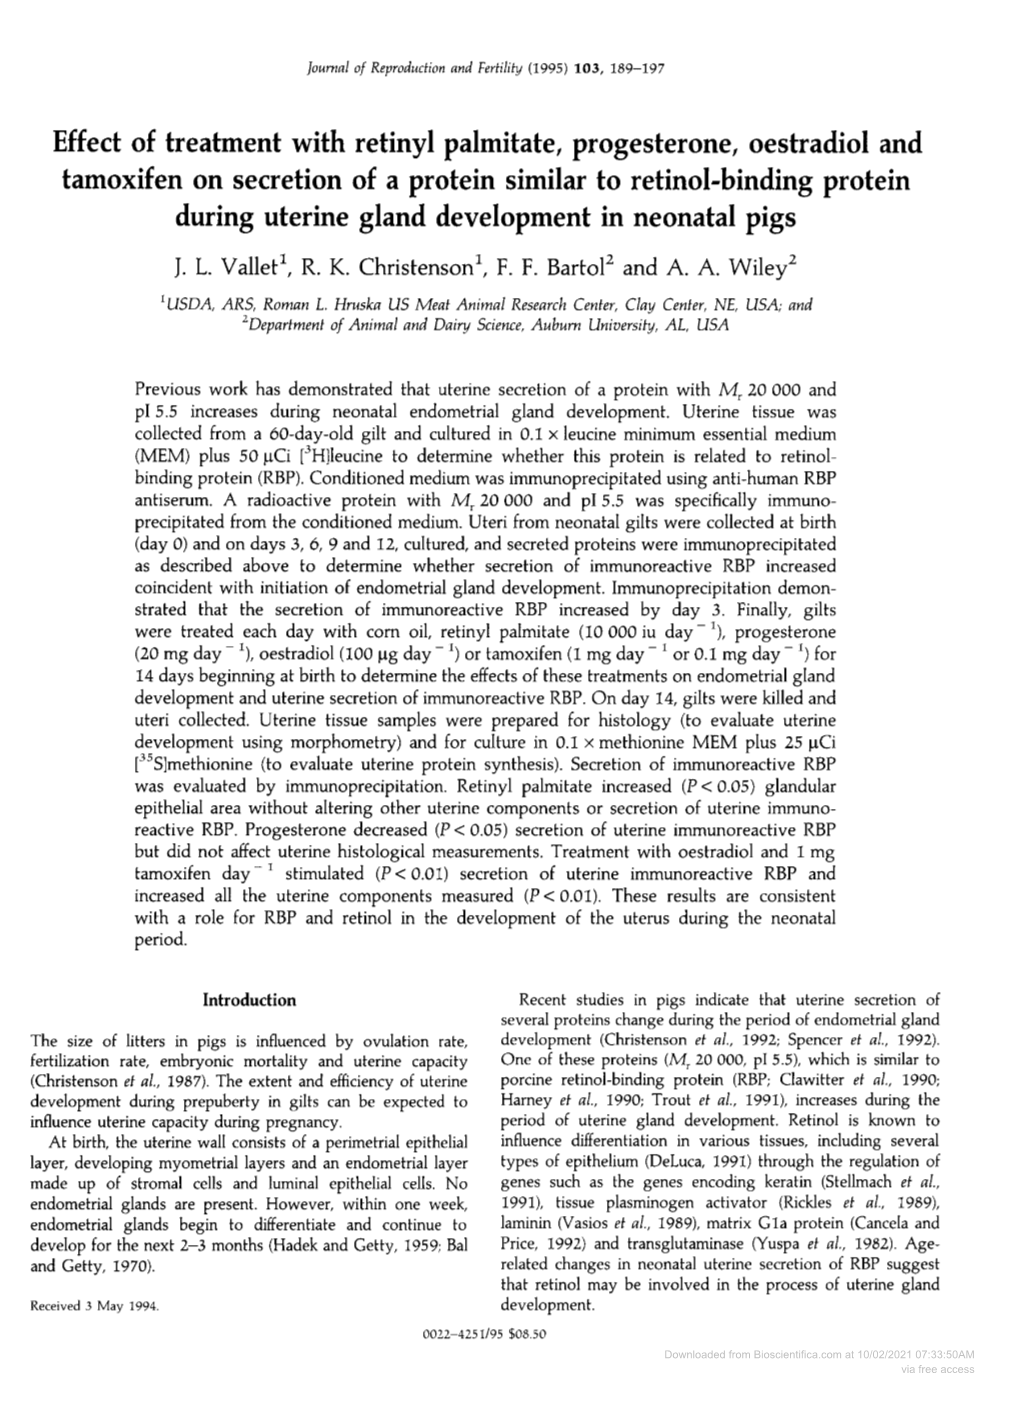 During Uterine Gland Development in Neonatal Pigs J